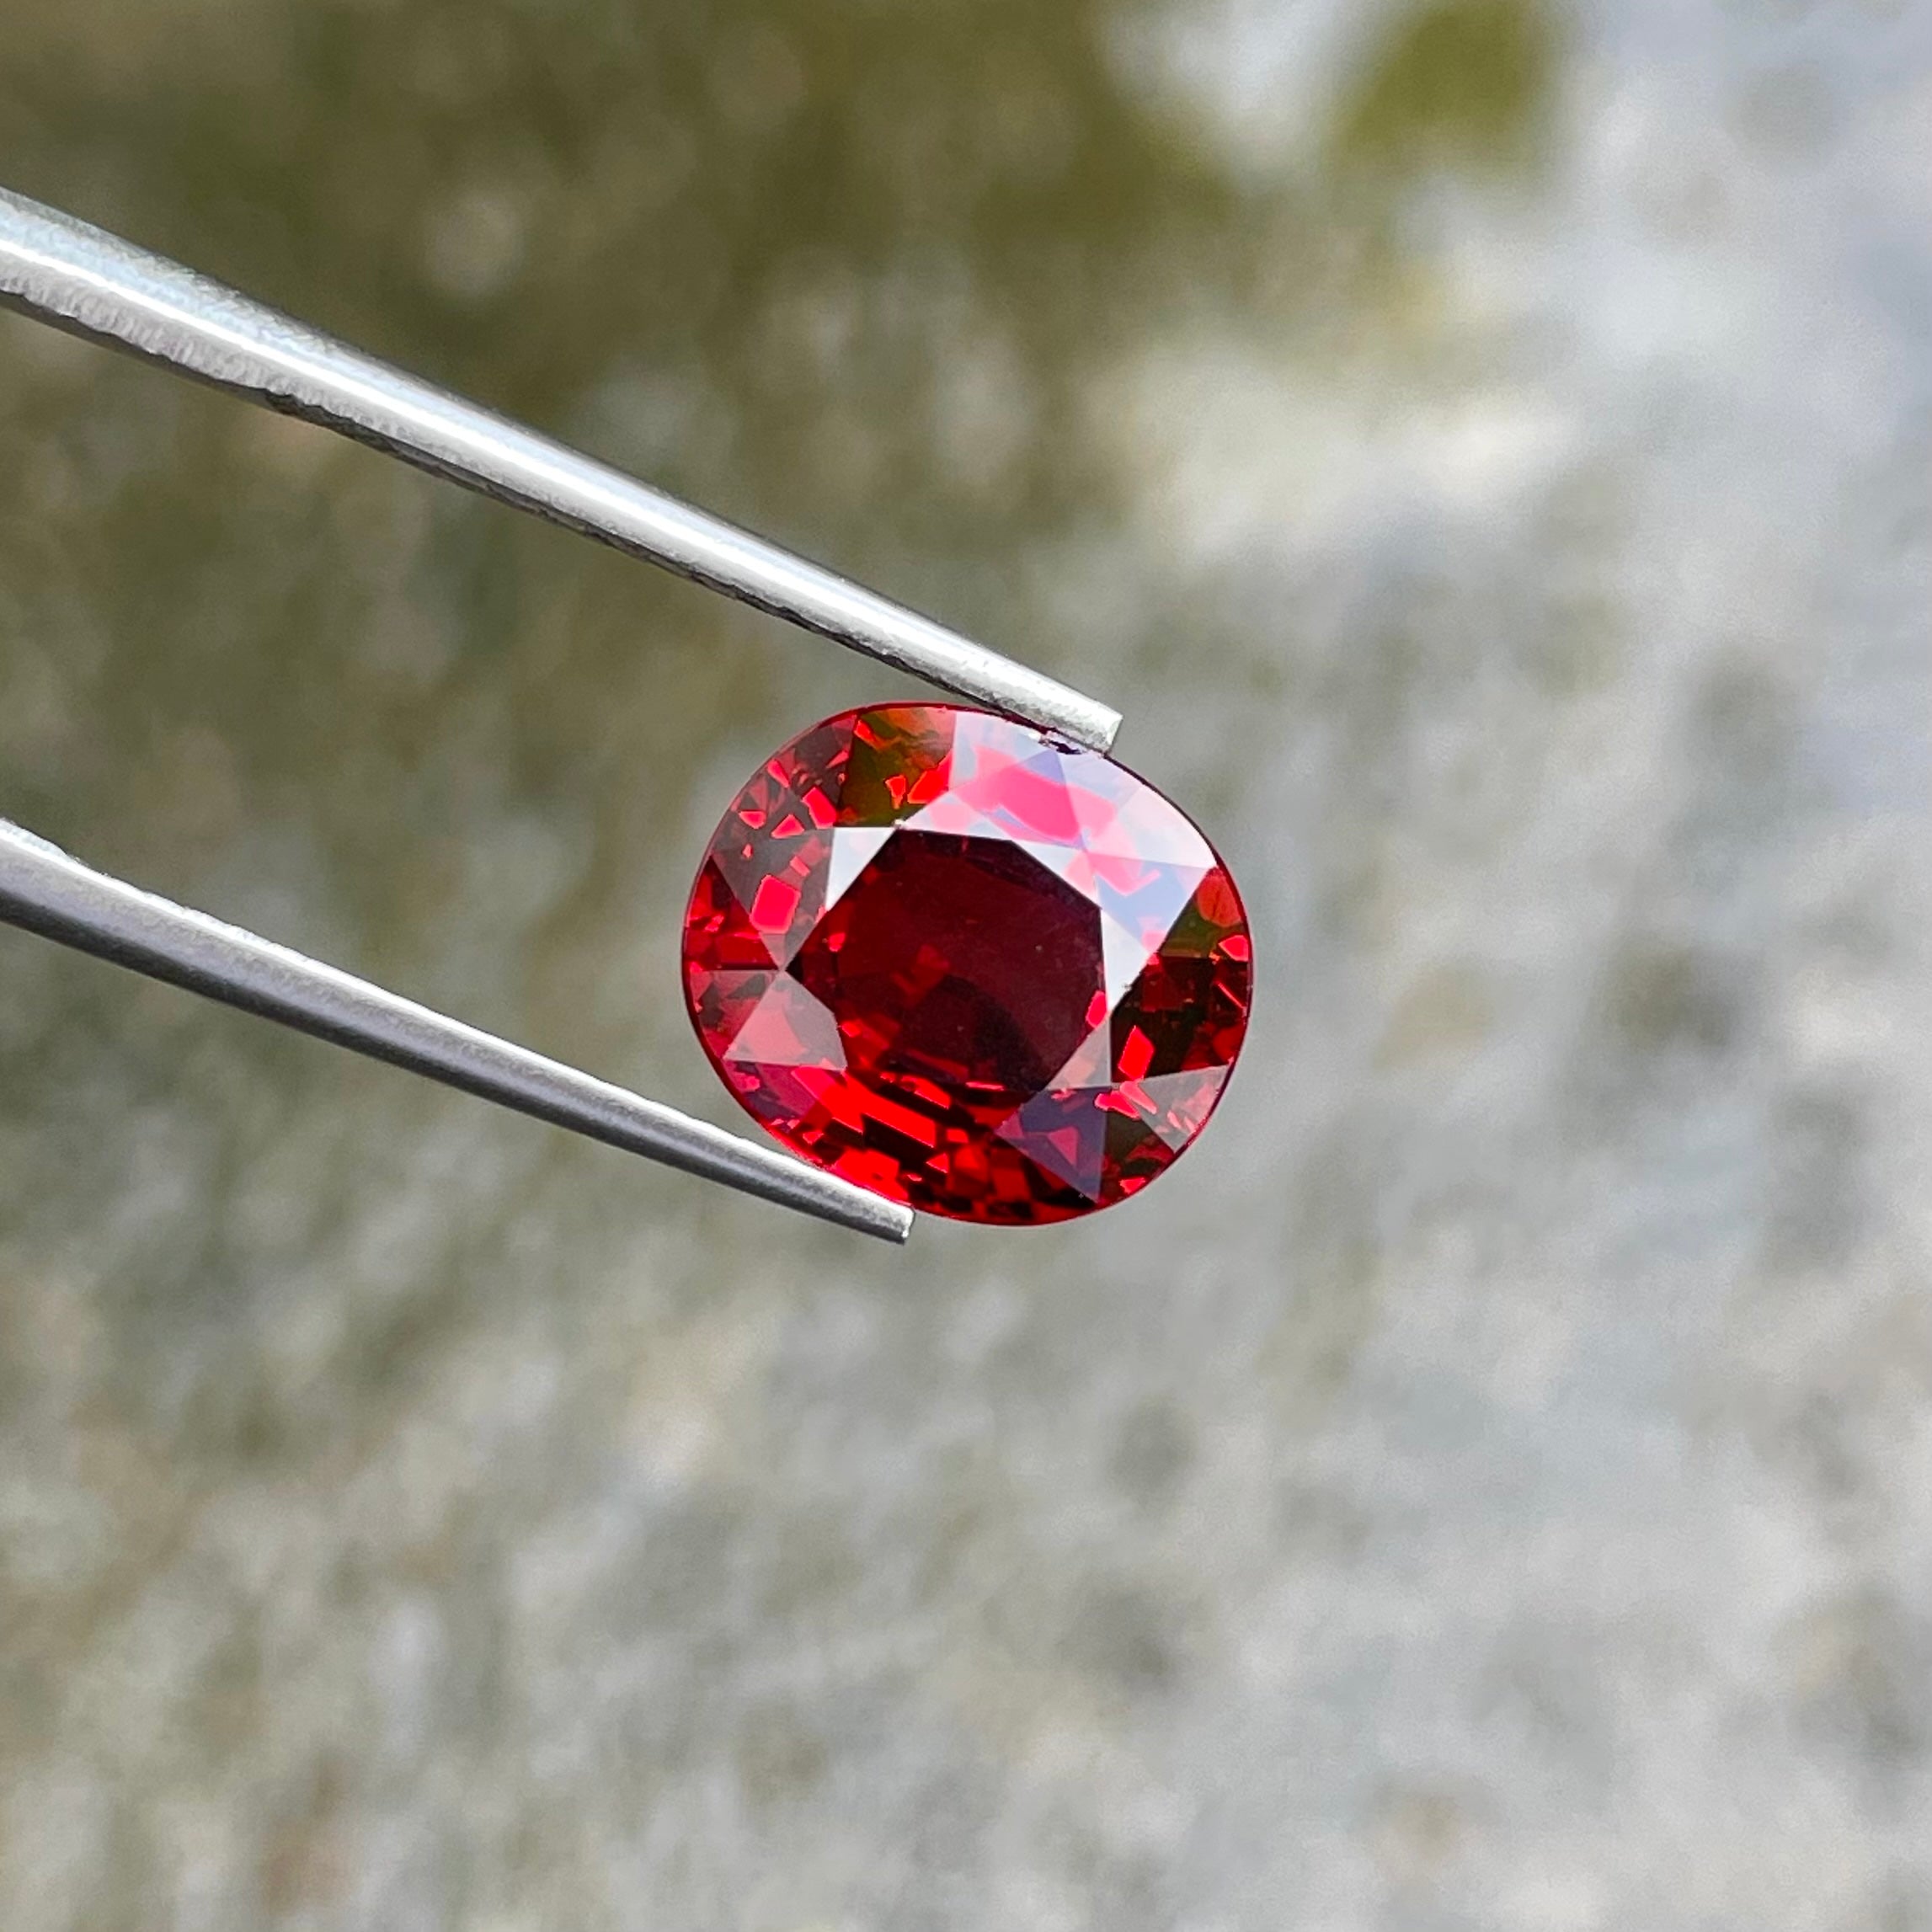 Spessartite Red Garnet 5.95 carats Fancy Oval Cut Natural Mozambique's Gemstone